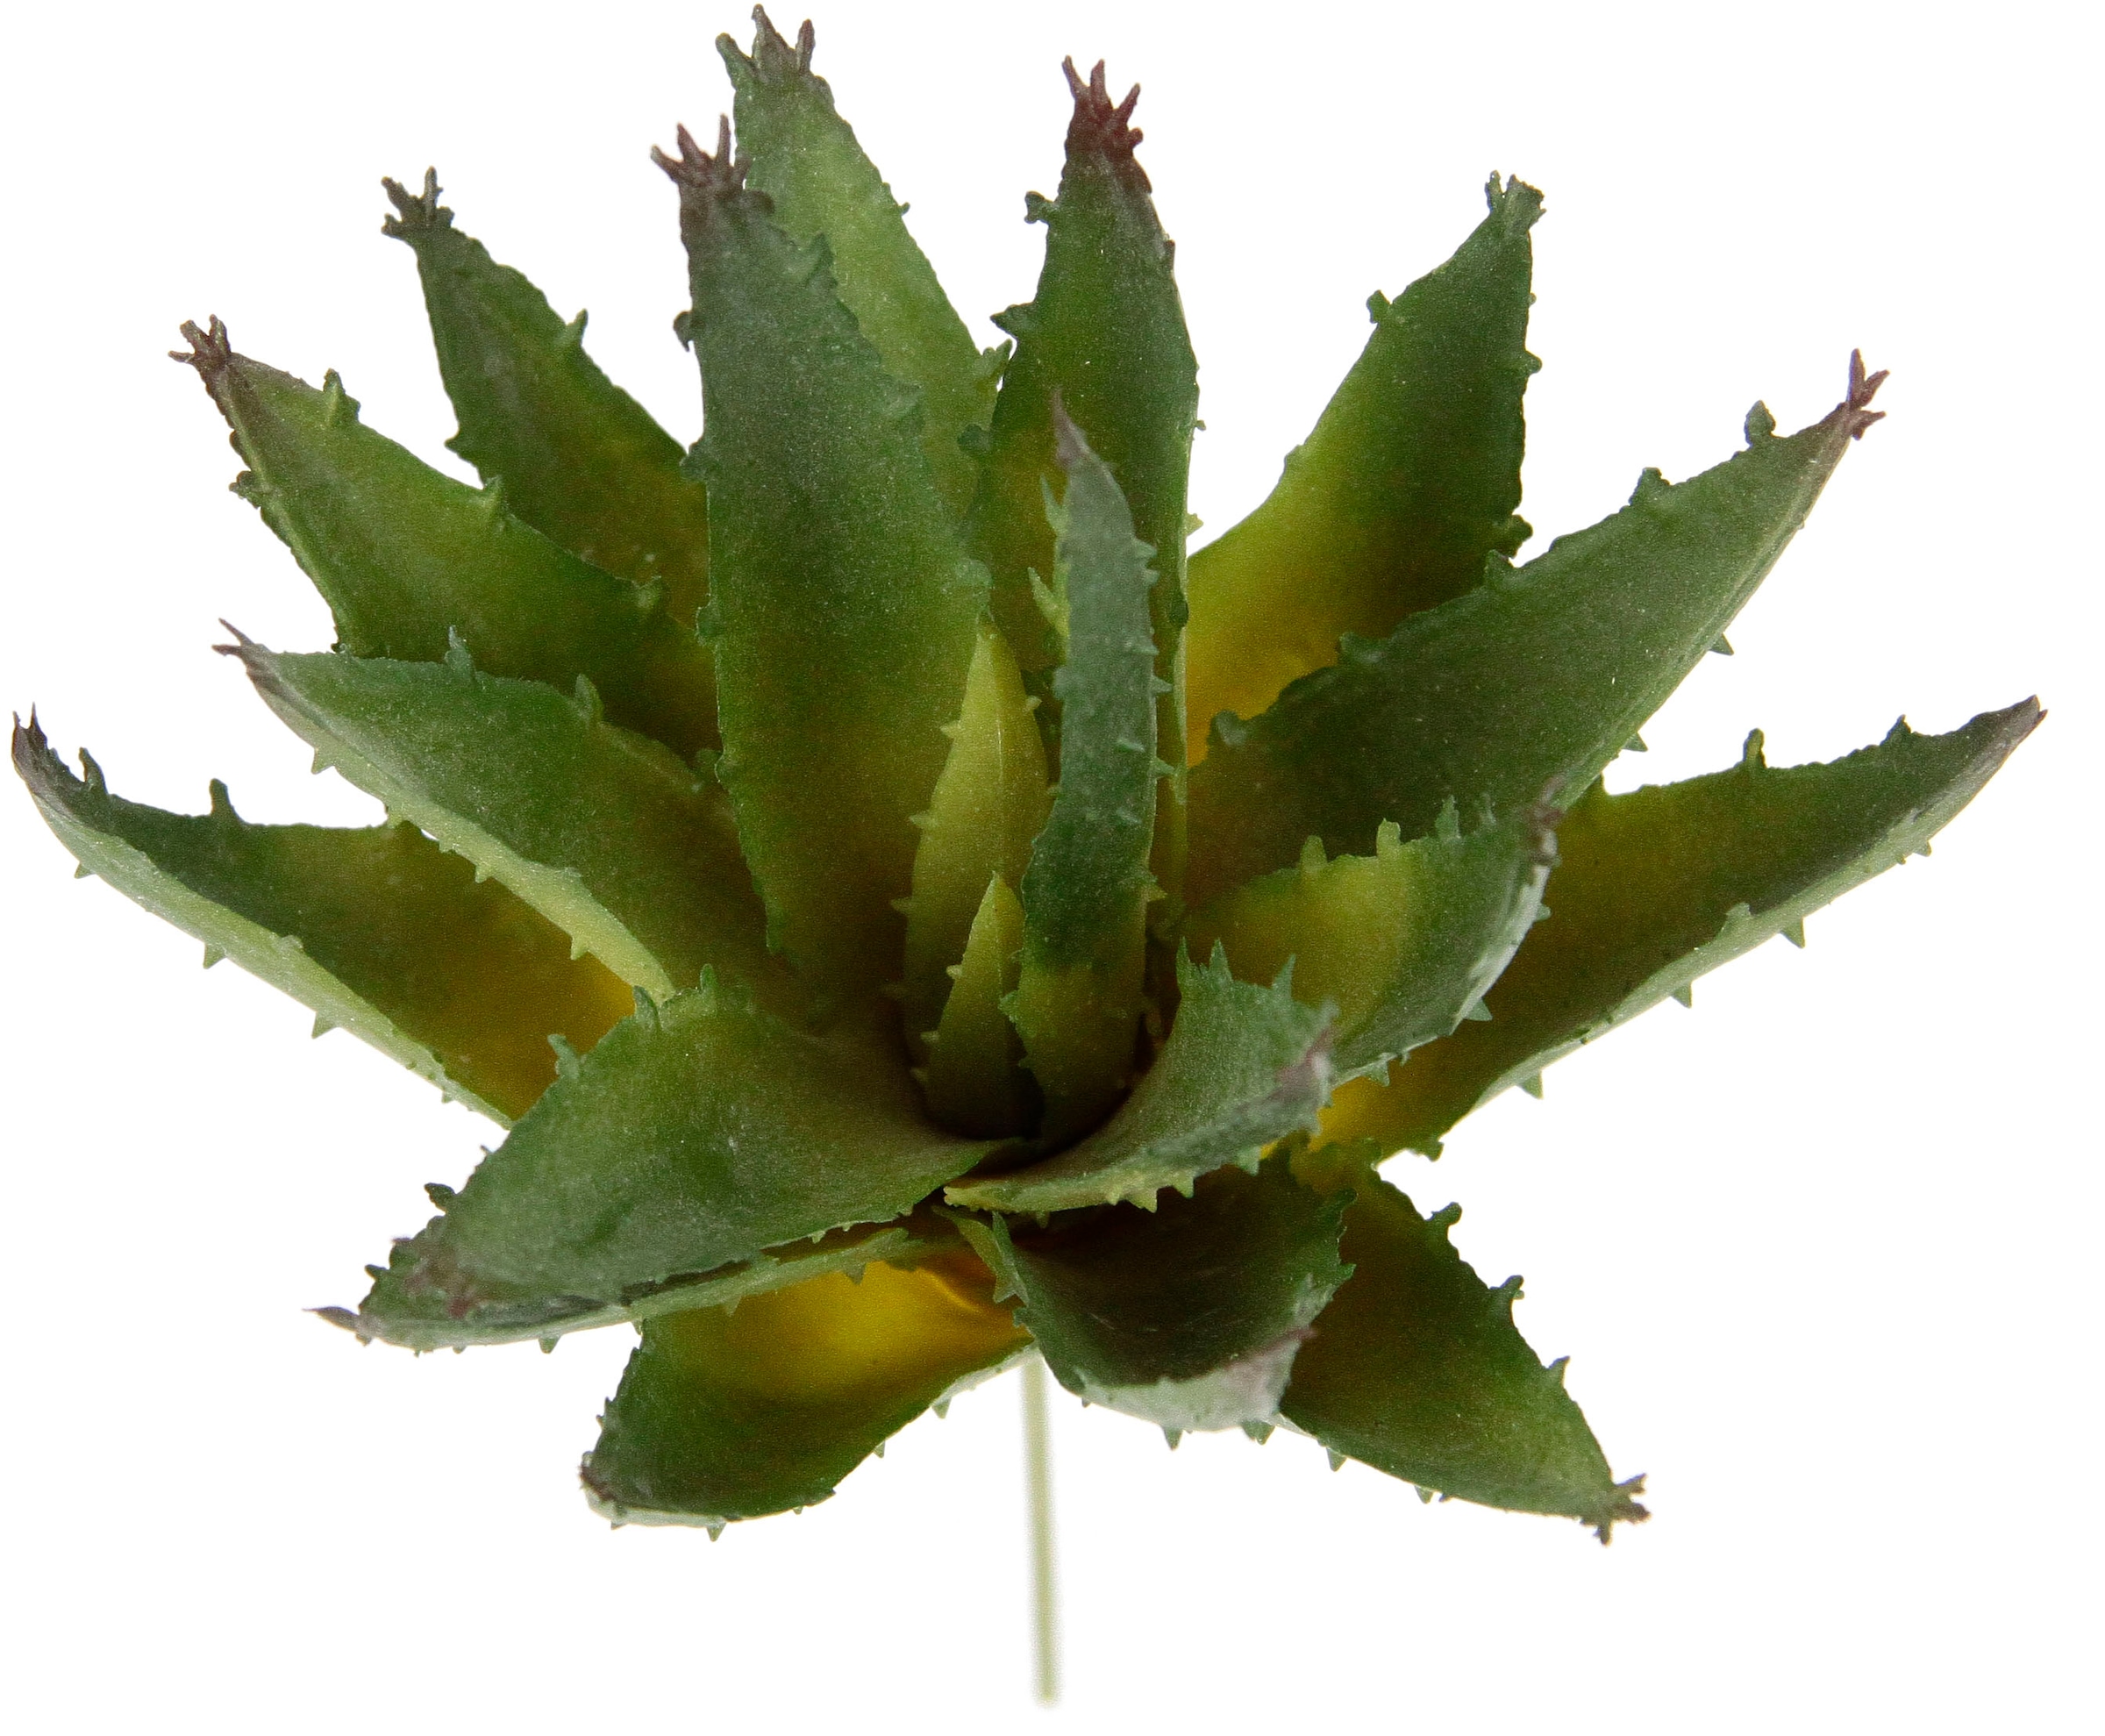 kaufen Set, I.GE.A. künstliche Aloe, jetzt Sukkulenten, 4er Pflanzen, Agave, Kaktus »Dekorative Sukkulenten«, Kunstpflanze